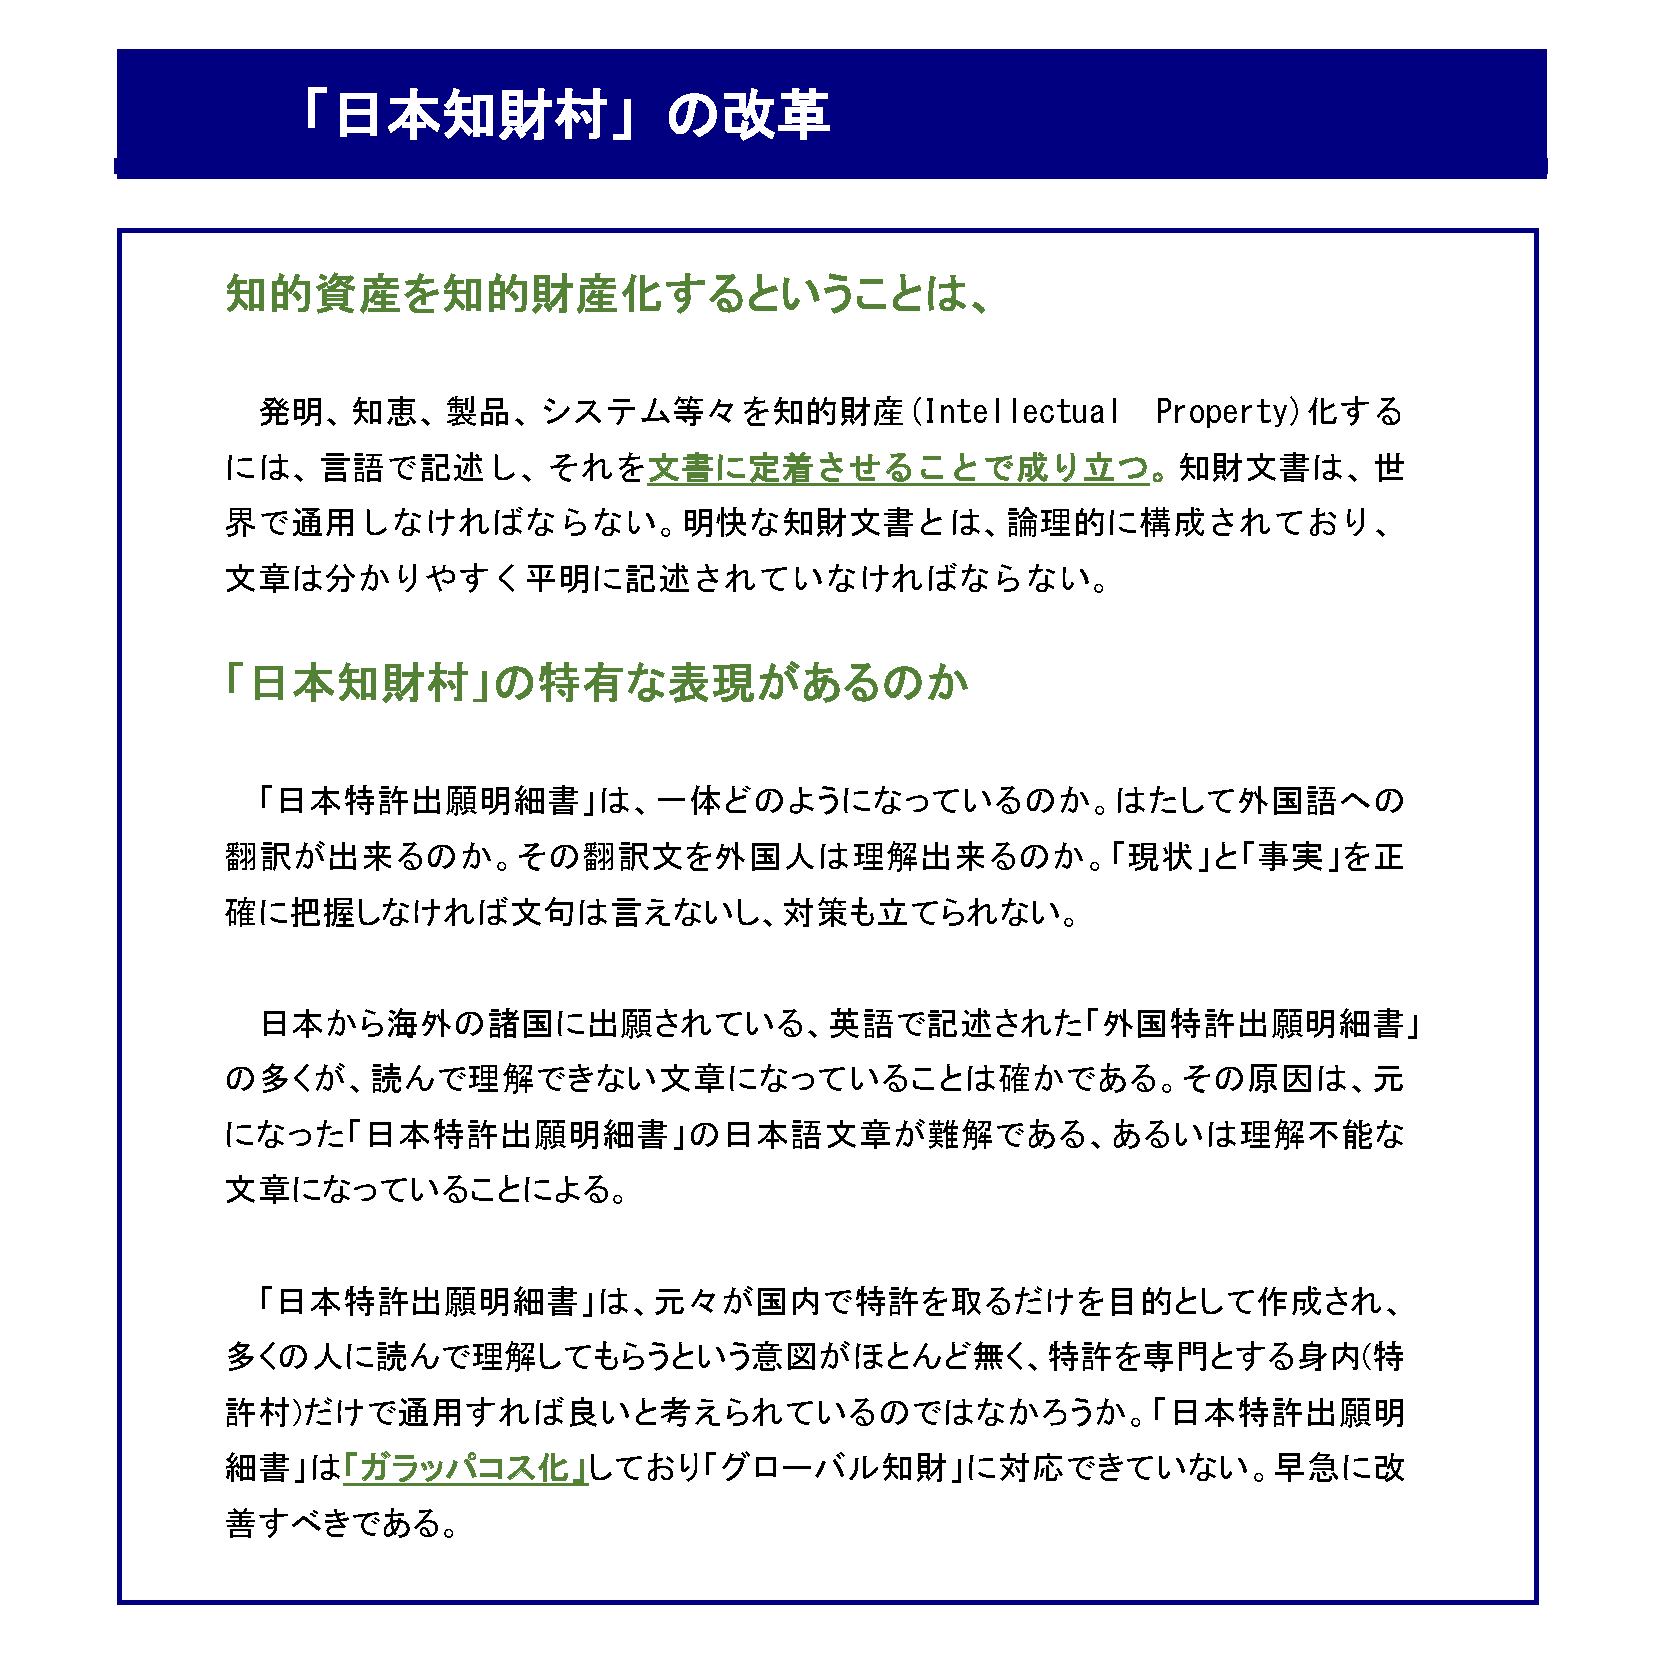 「日本知財村」の改革